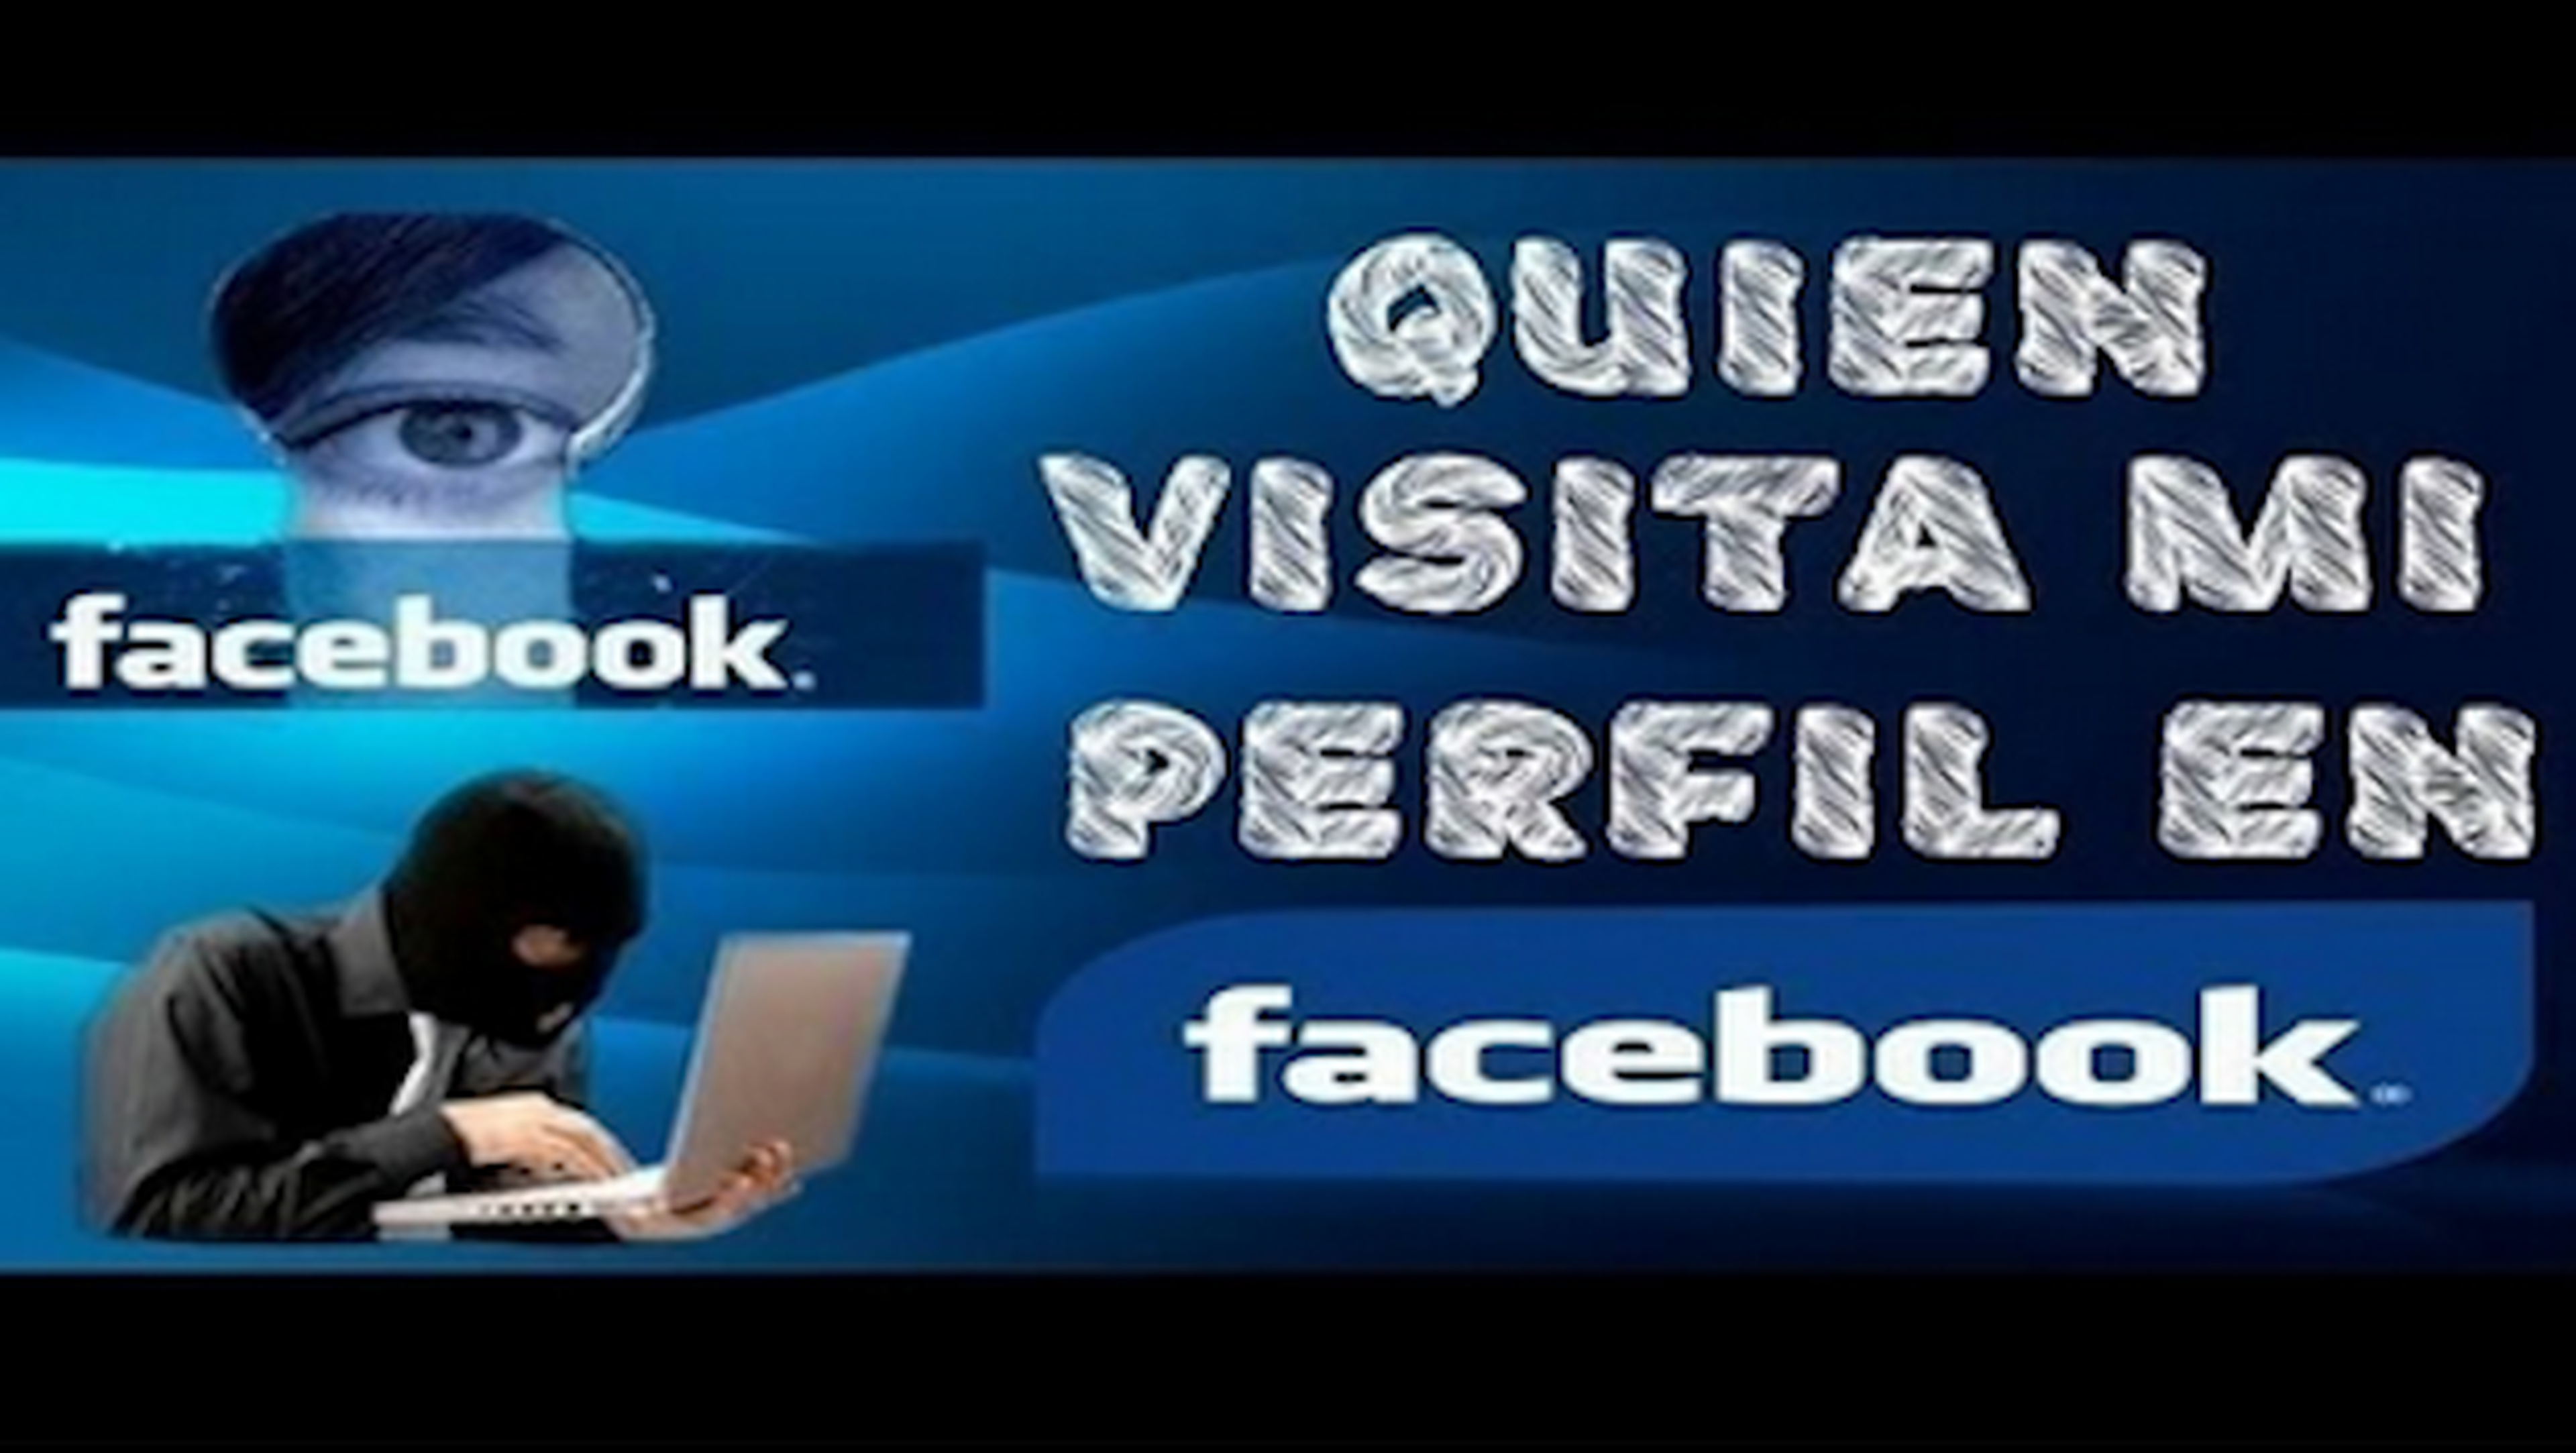 Nuevo virus en Facebook promete saber quién visita tu perfil